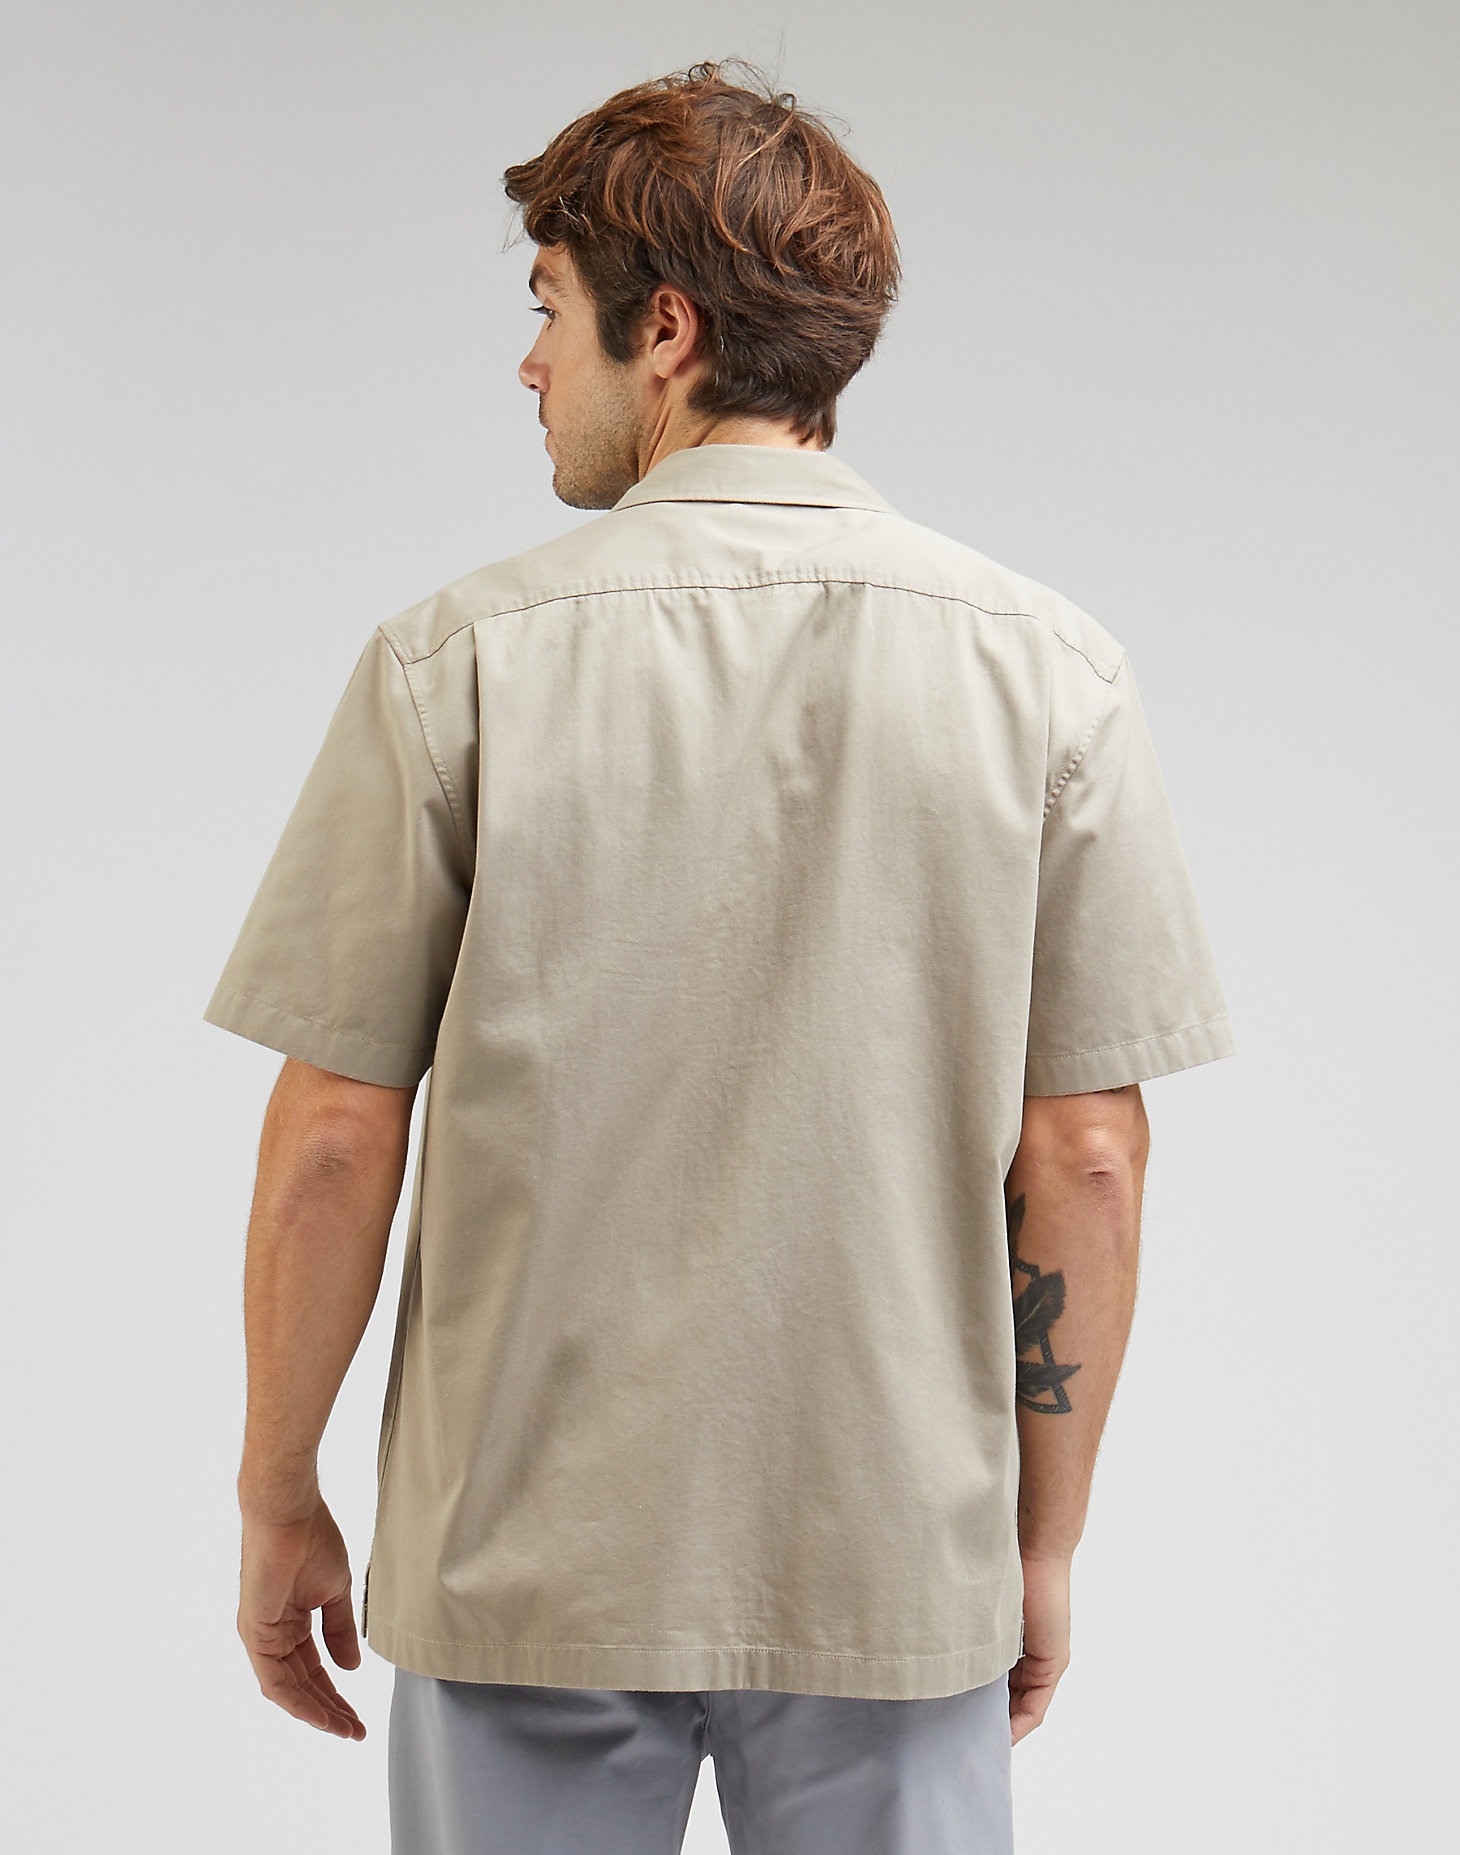 Short Sleeve Chetopa Shirt in Mushroom alternative view 1